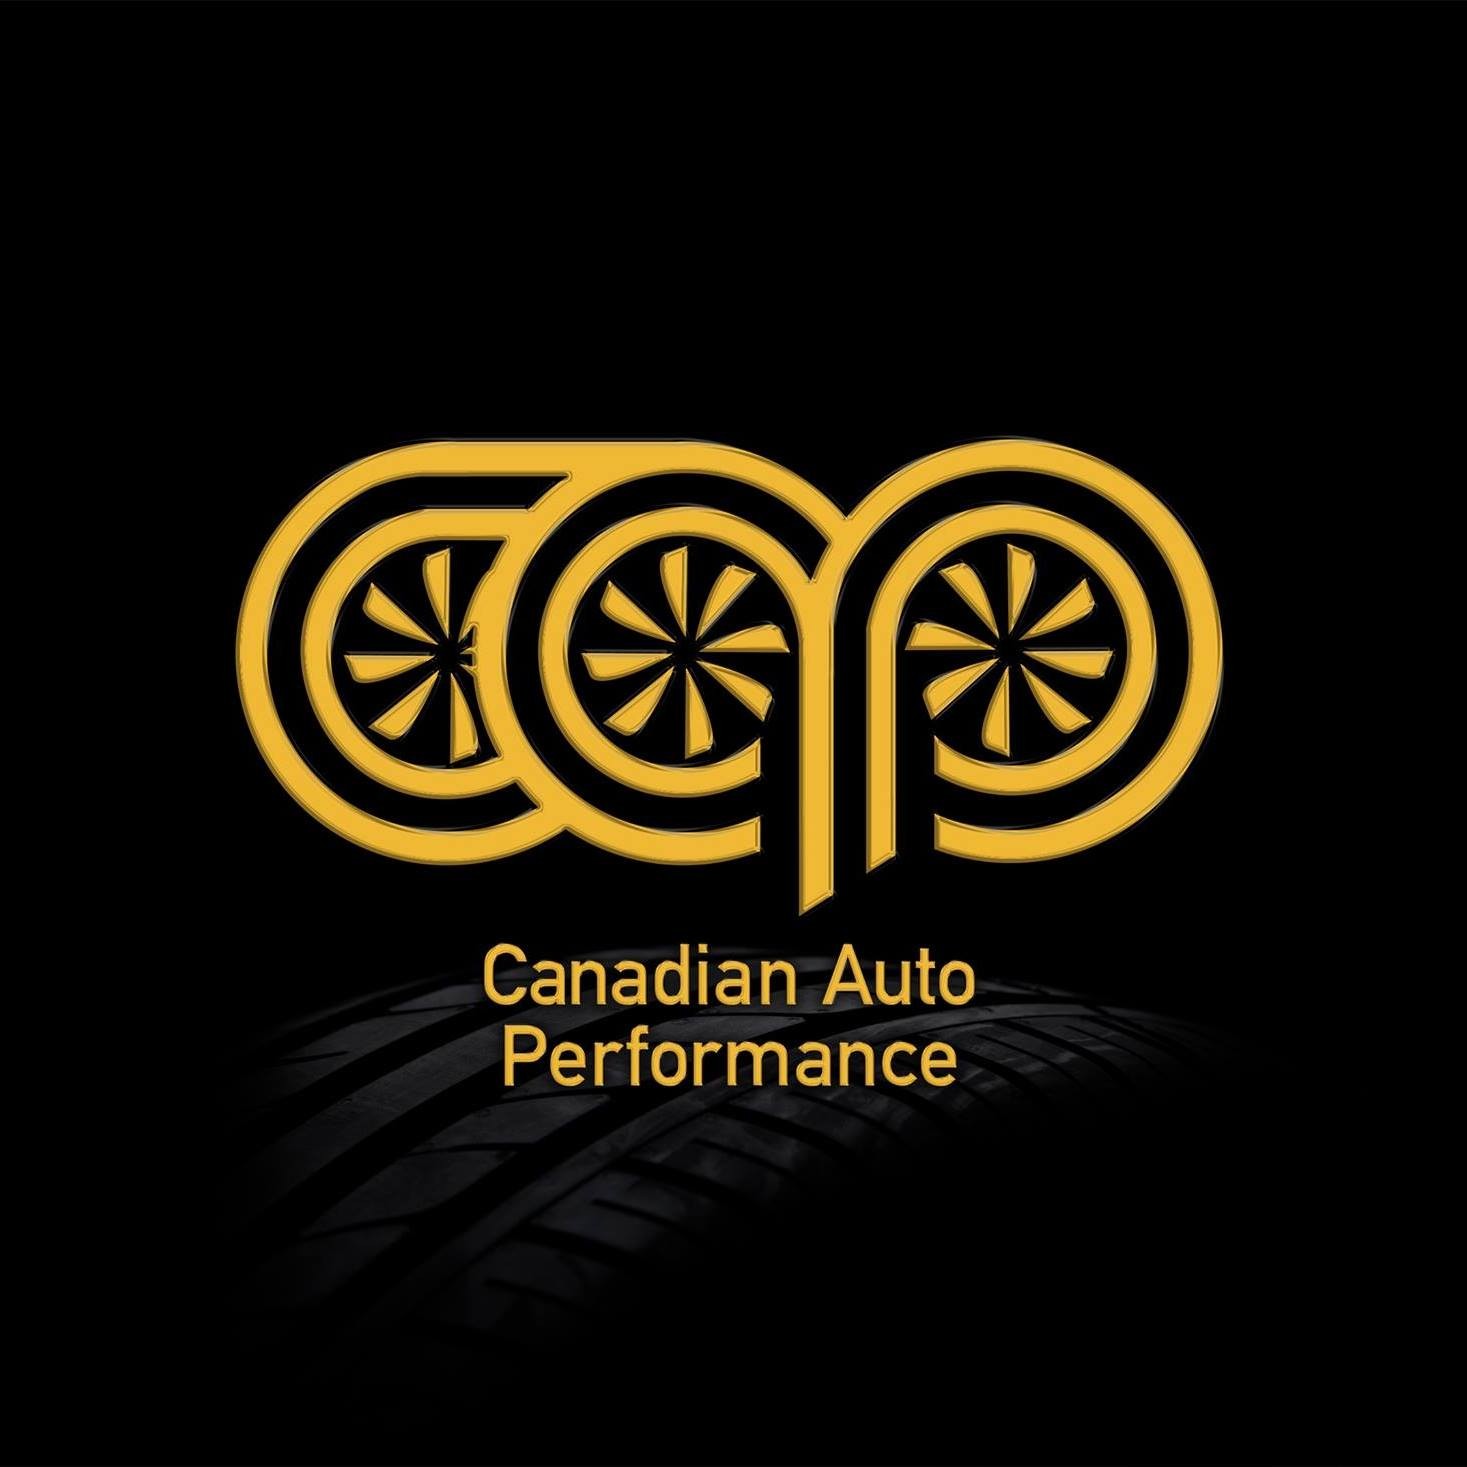 Canadian Auto Performance